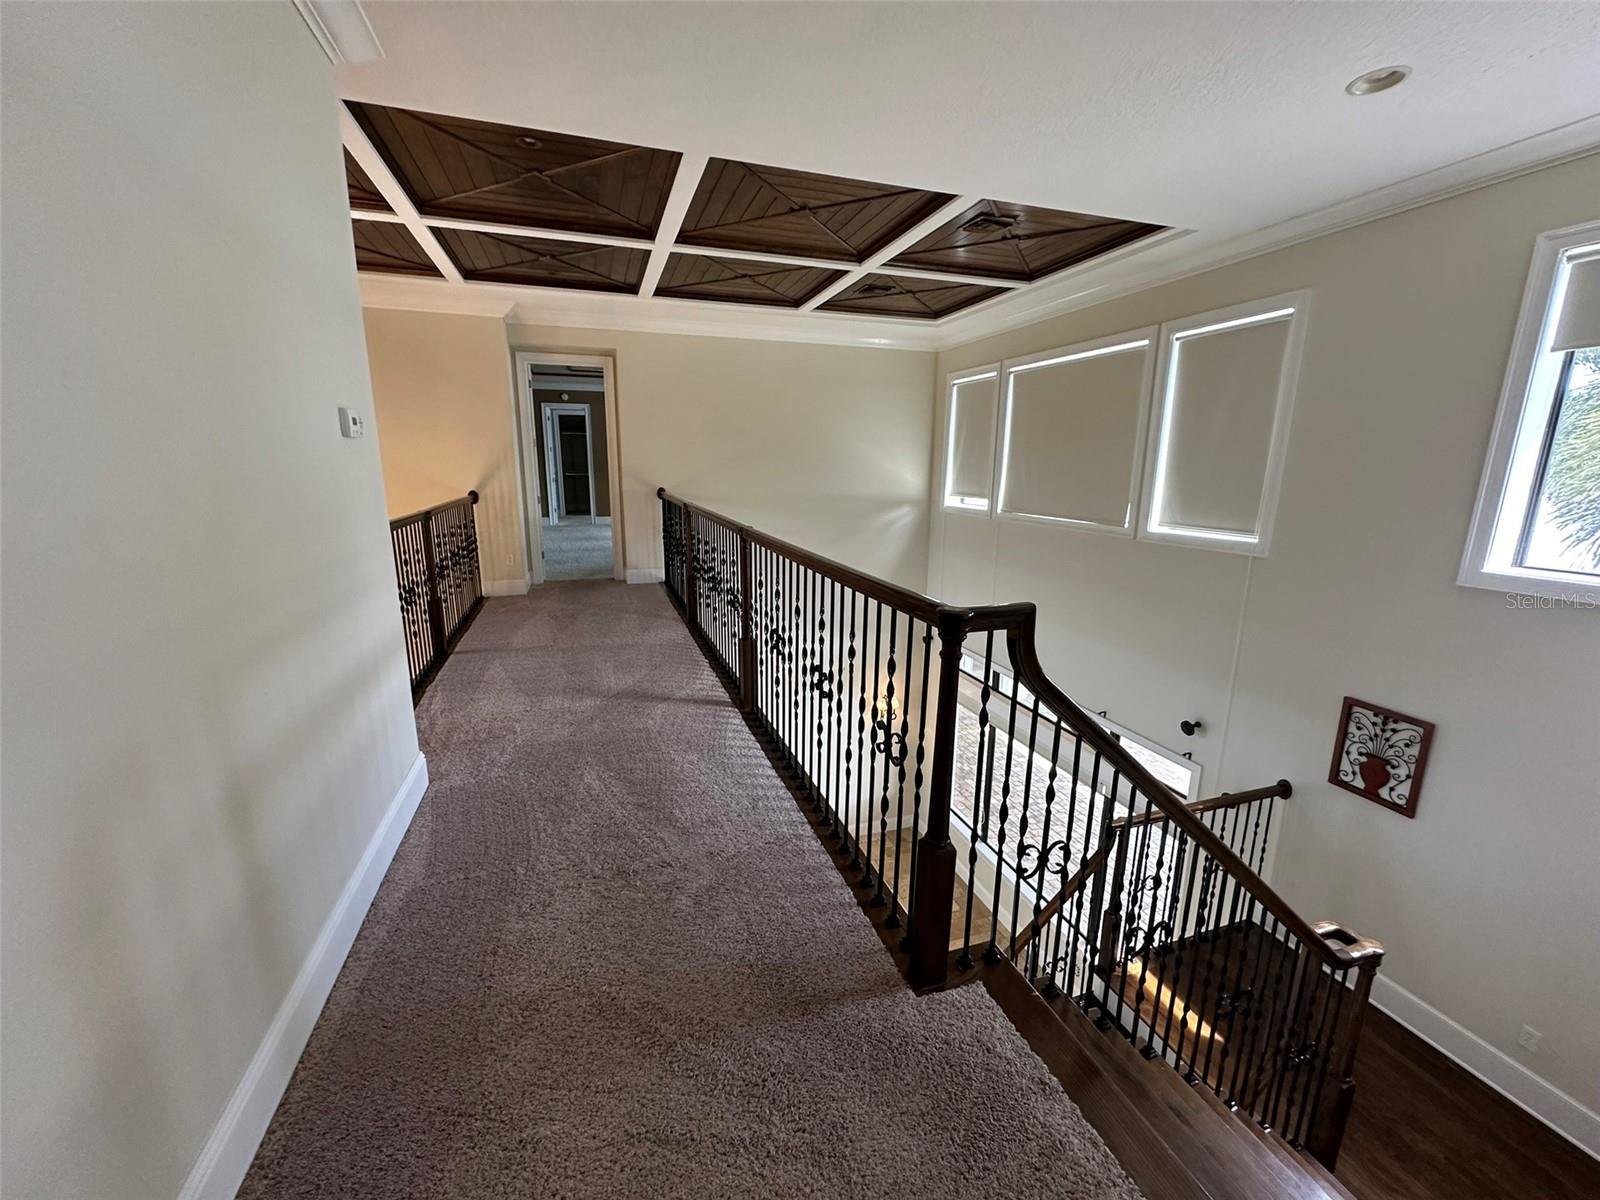 second floor stairway with dark carpet